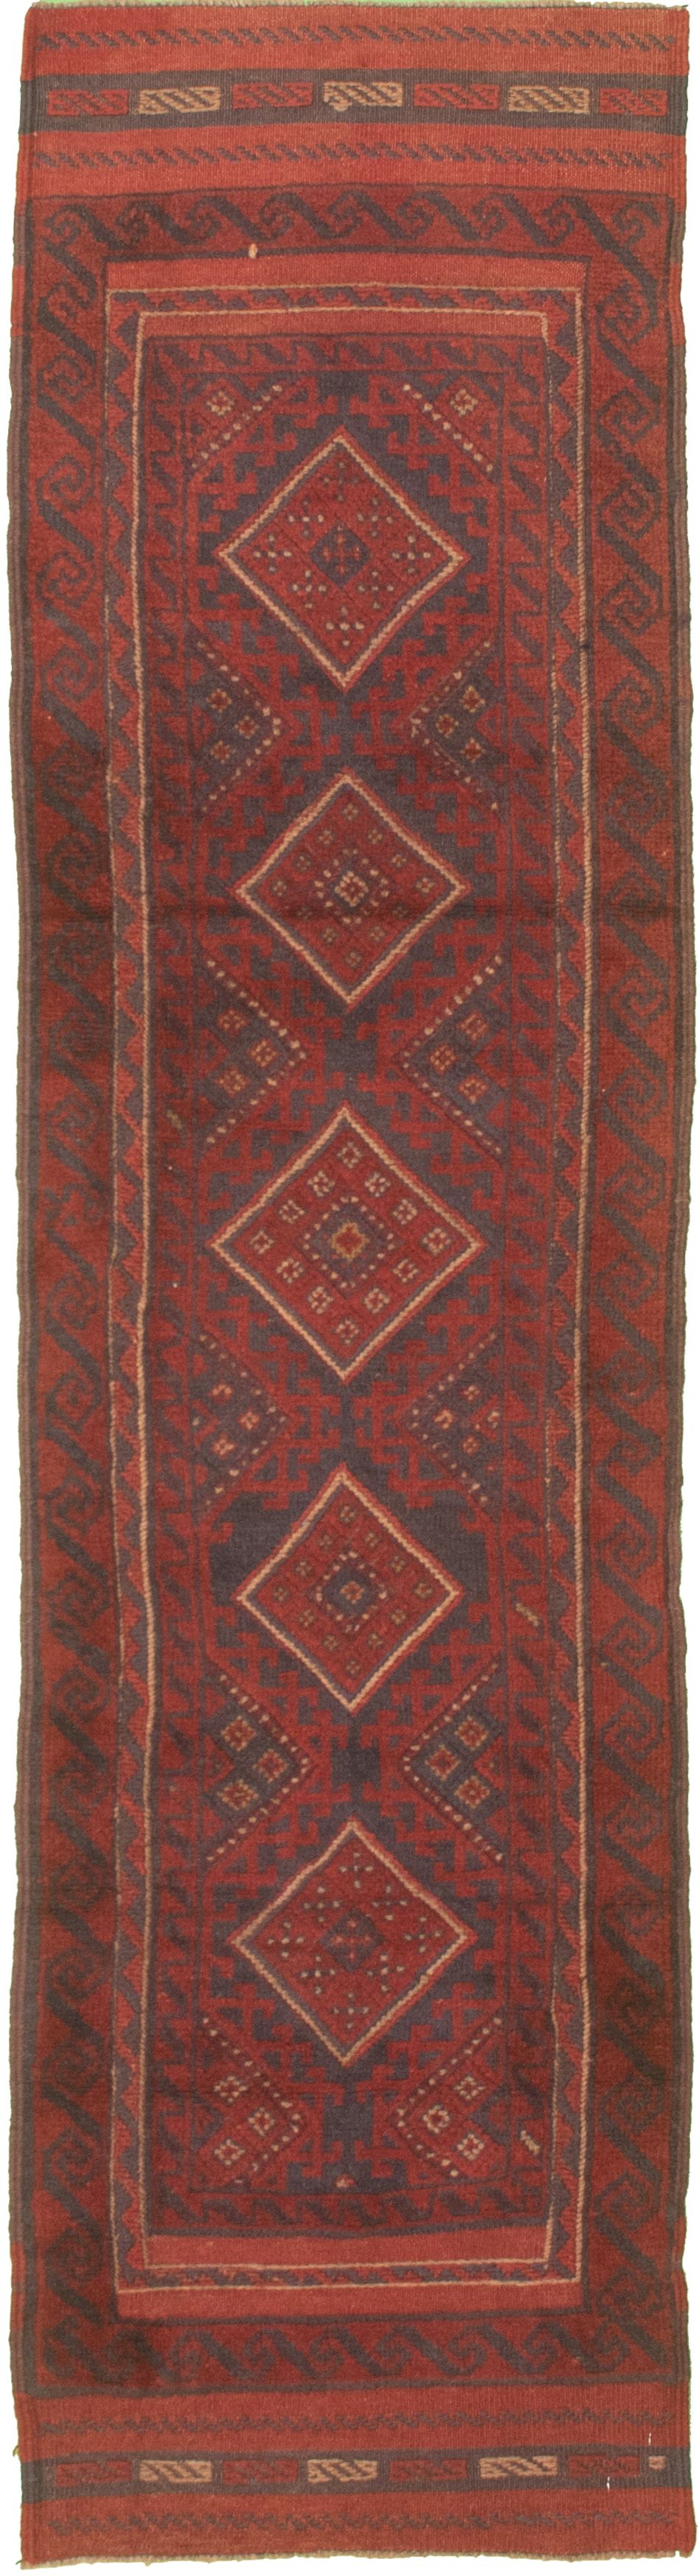 Hand-knotted Tajik Caucasian Red Wool Rug 2'1" x 8'4" (14) Size: 2'1" x 8'4"  